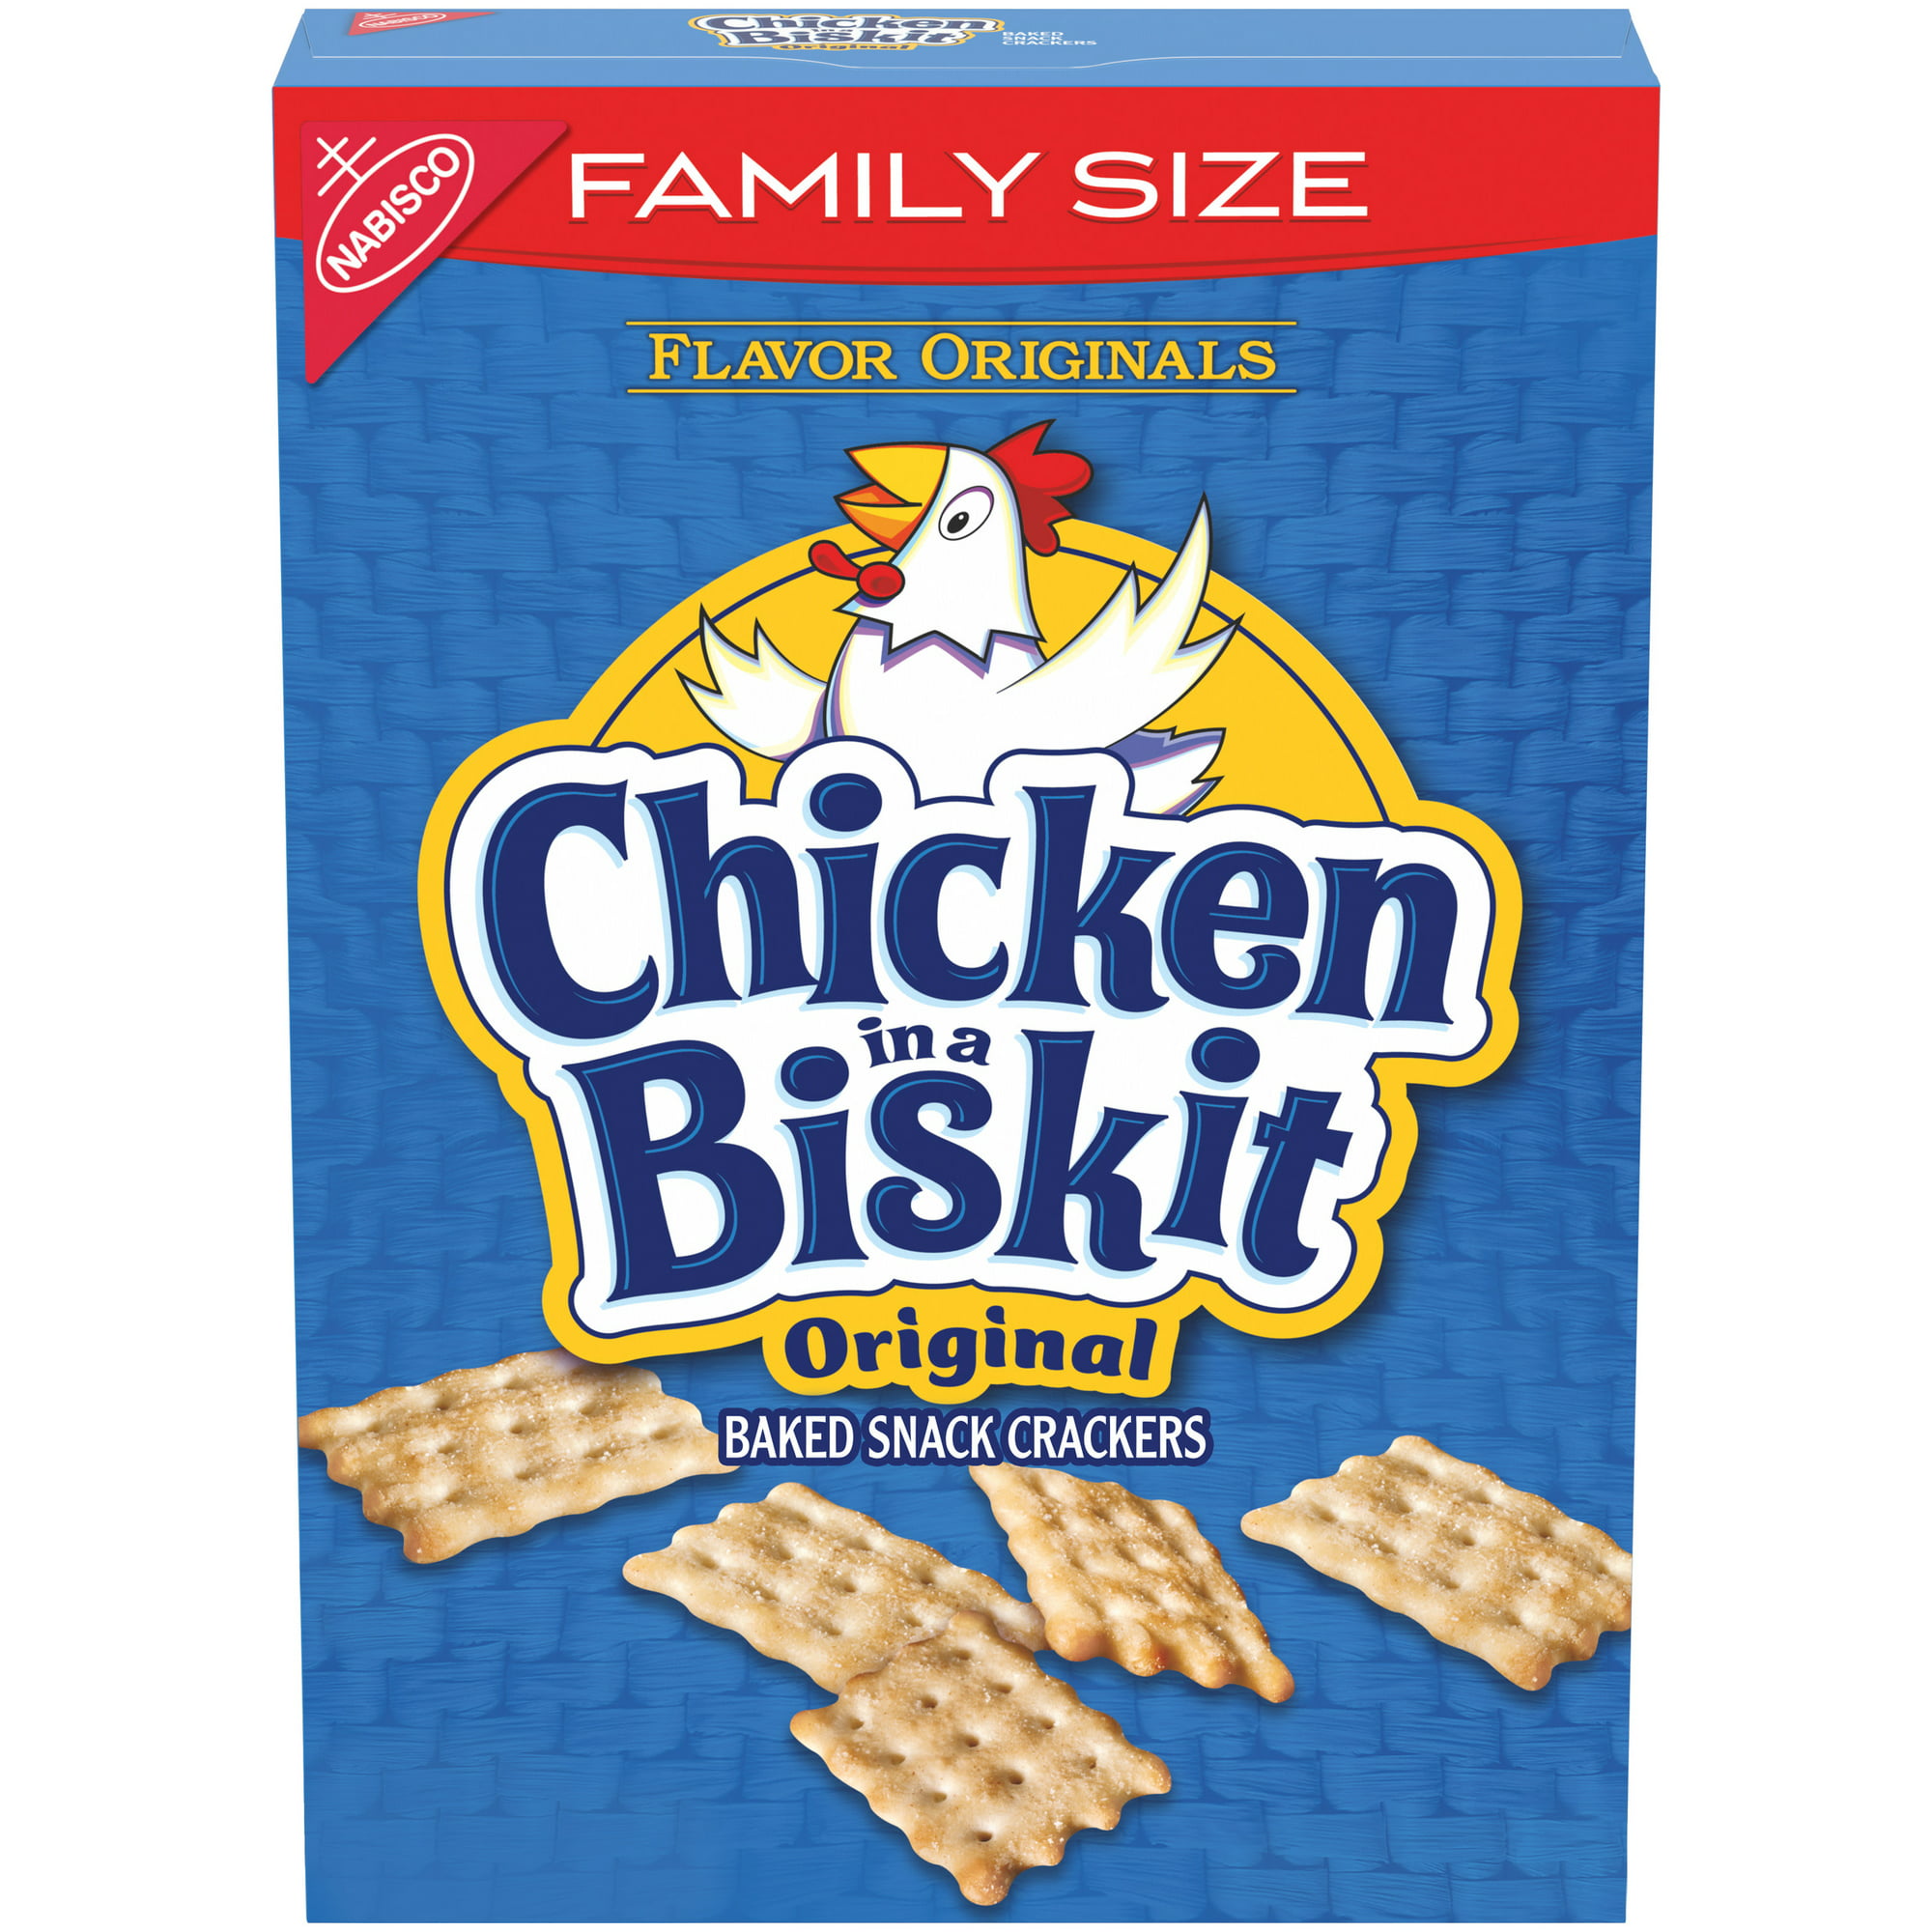 Chicken-in-a-Biskit-Original-Baked-Snack-Crackers-Family-Size-12-oz_186abbf7-055e-4e01-b3cf-4acb9750f761.5dba7e72906bef0a8f173a3b2586565b.jpeg